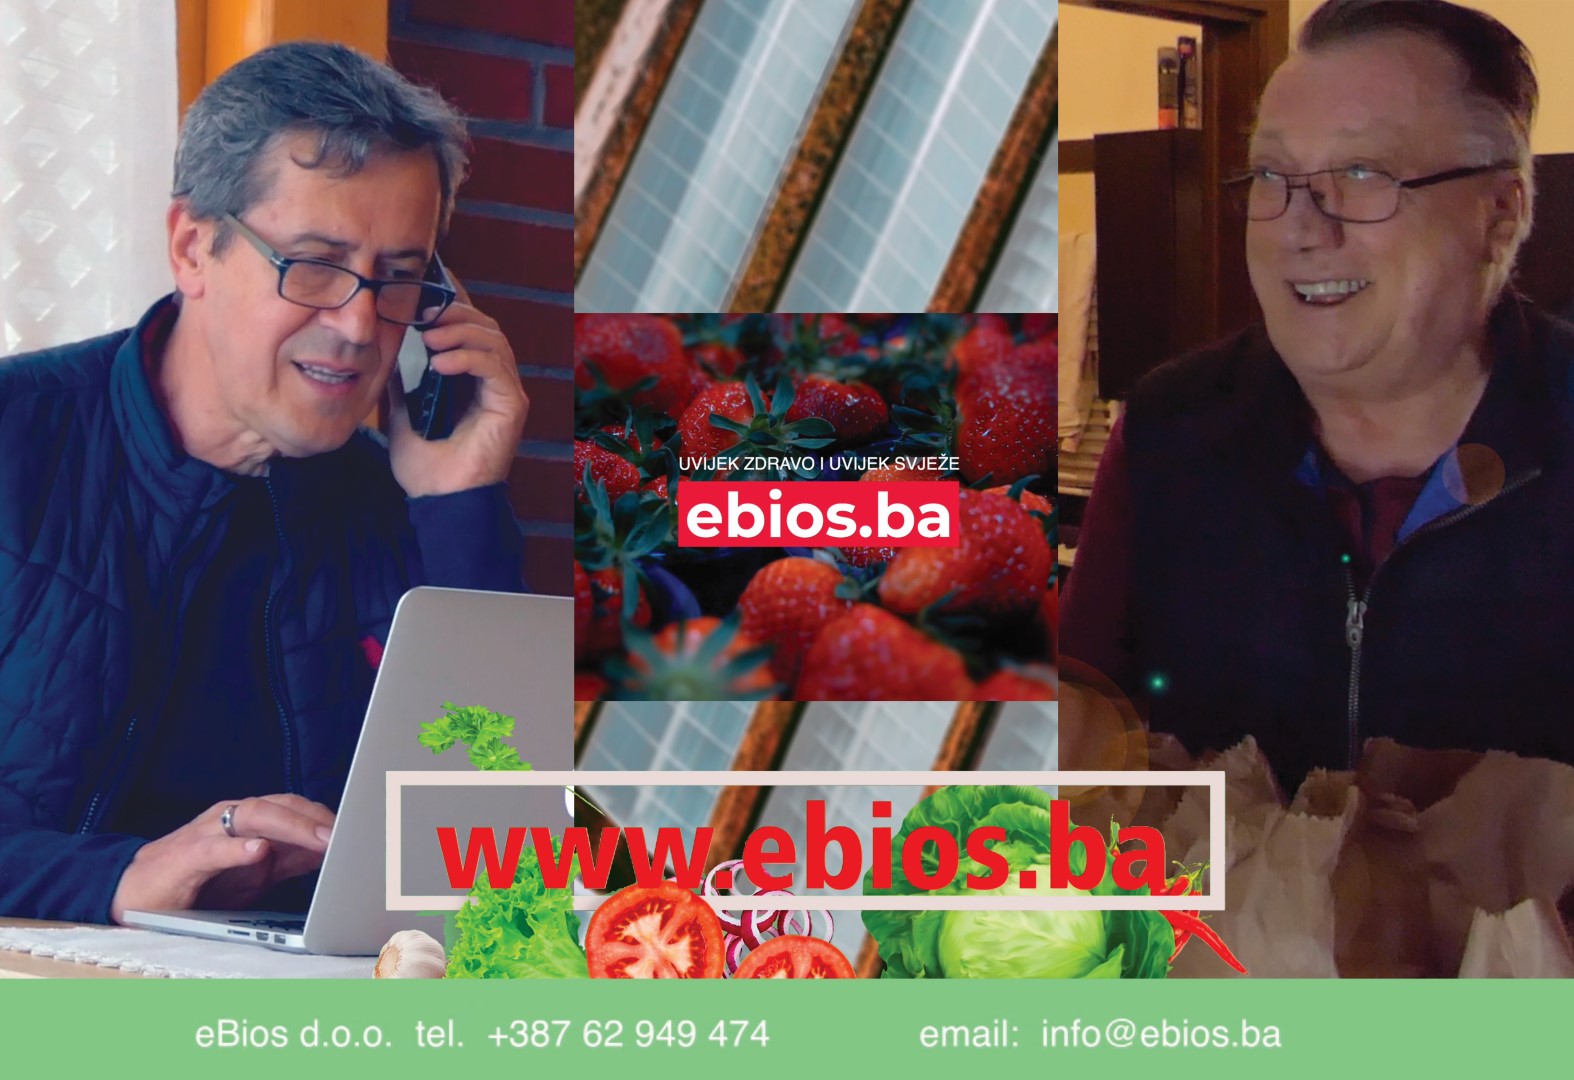 (VIDEO) Halid Bešlić i Enes Begović u reklamnoj kampanji online platforme eBios.ba